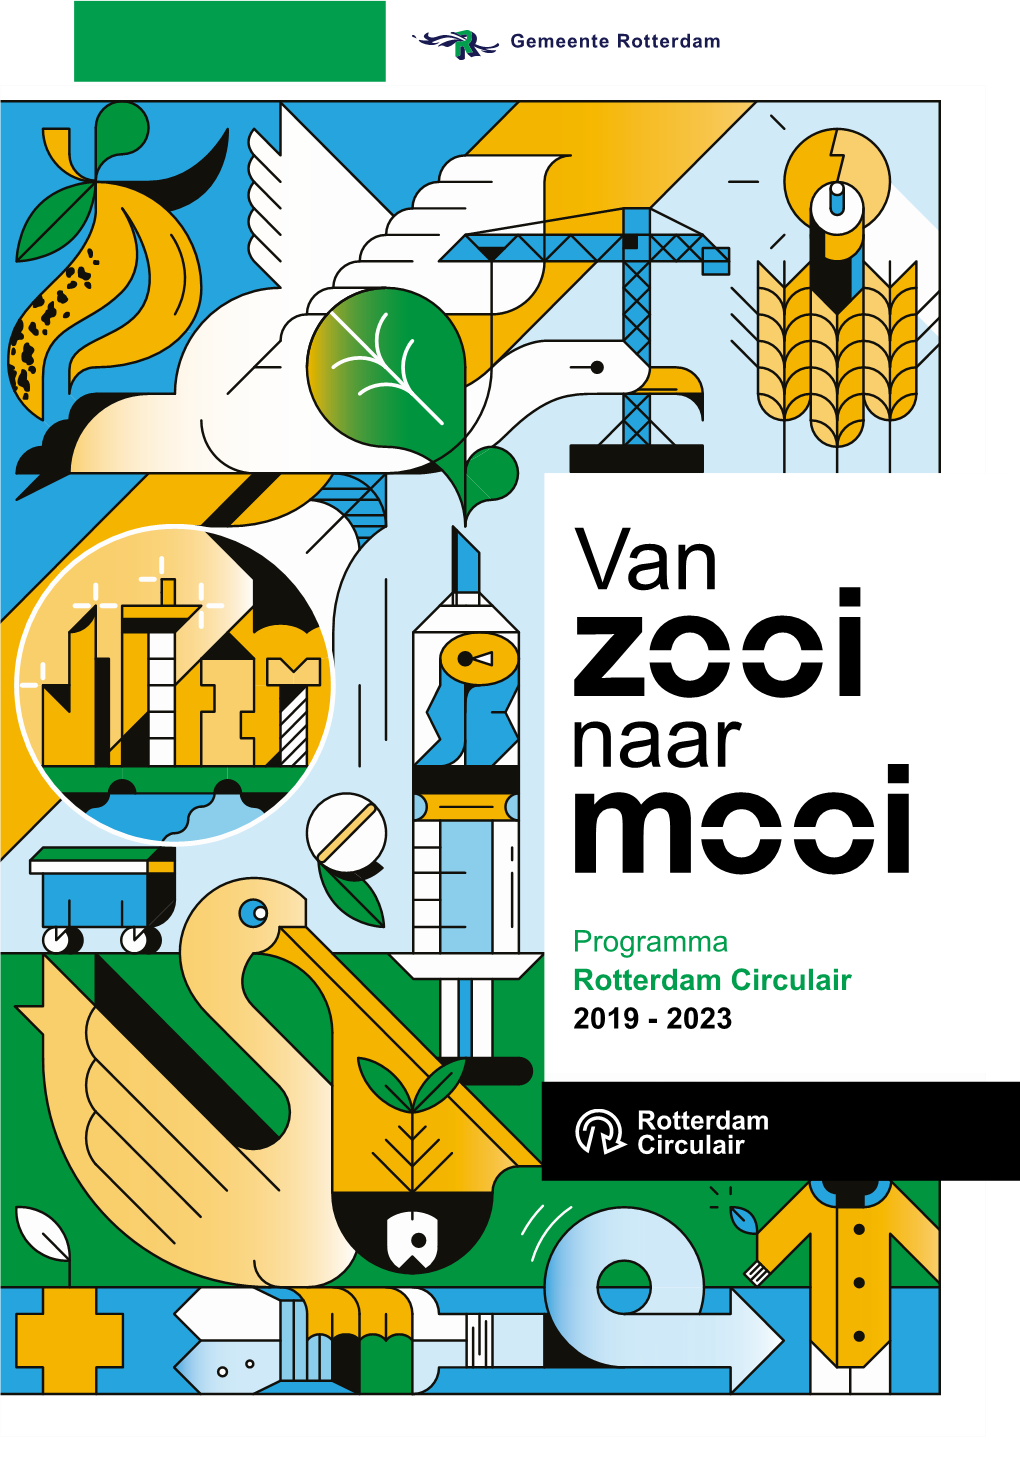 Programma Rotterdam Circulair 2019 - 2023